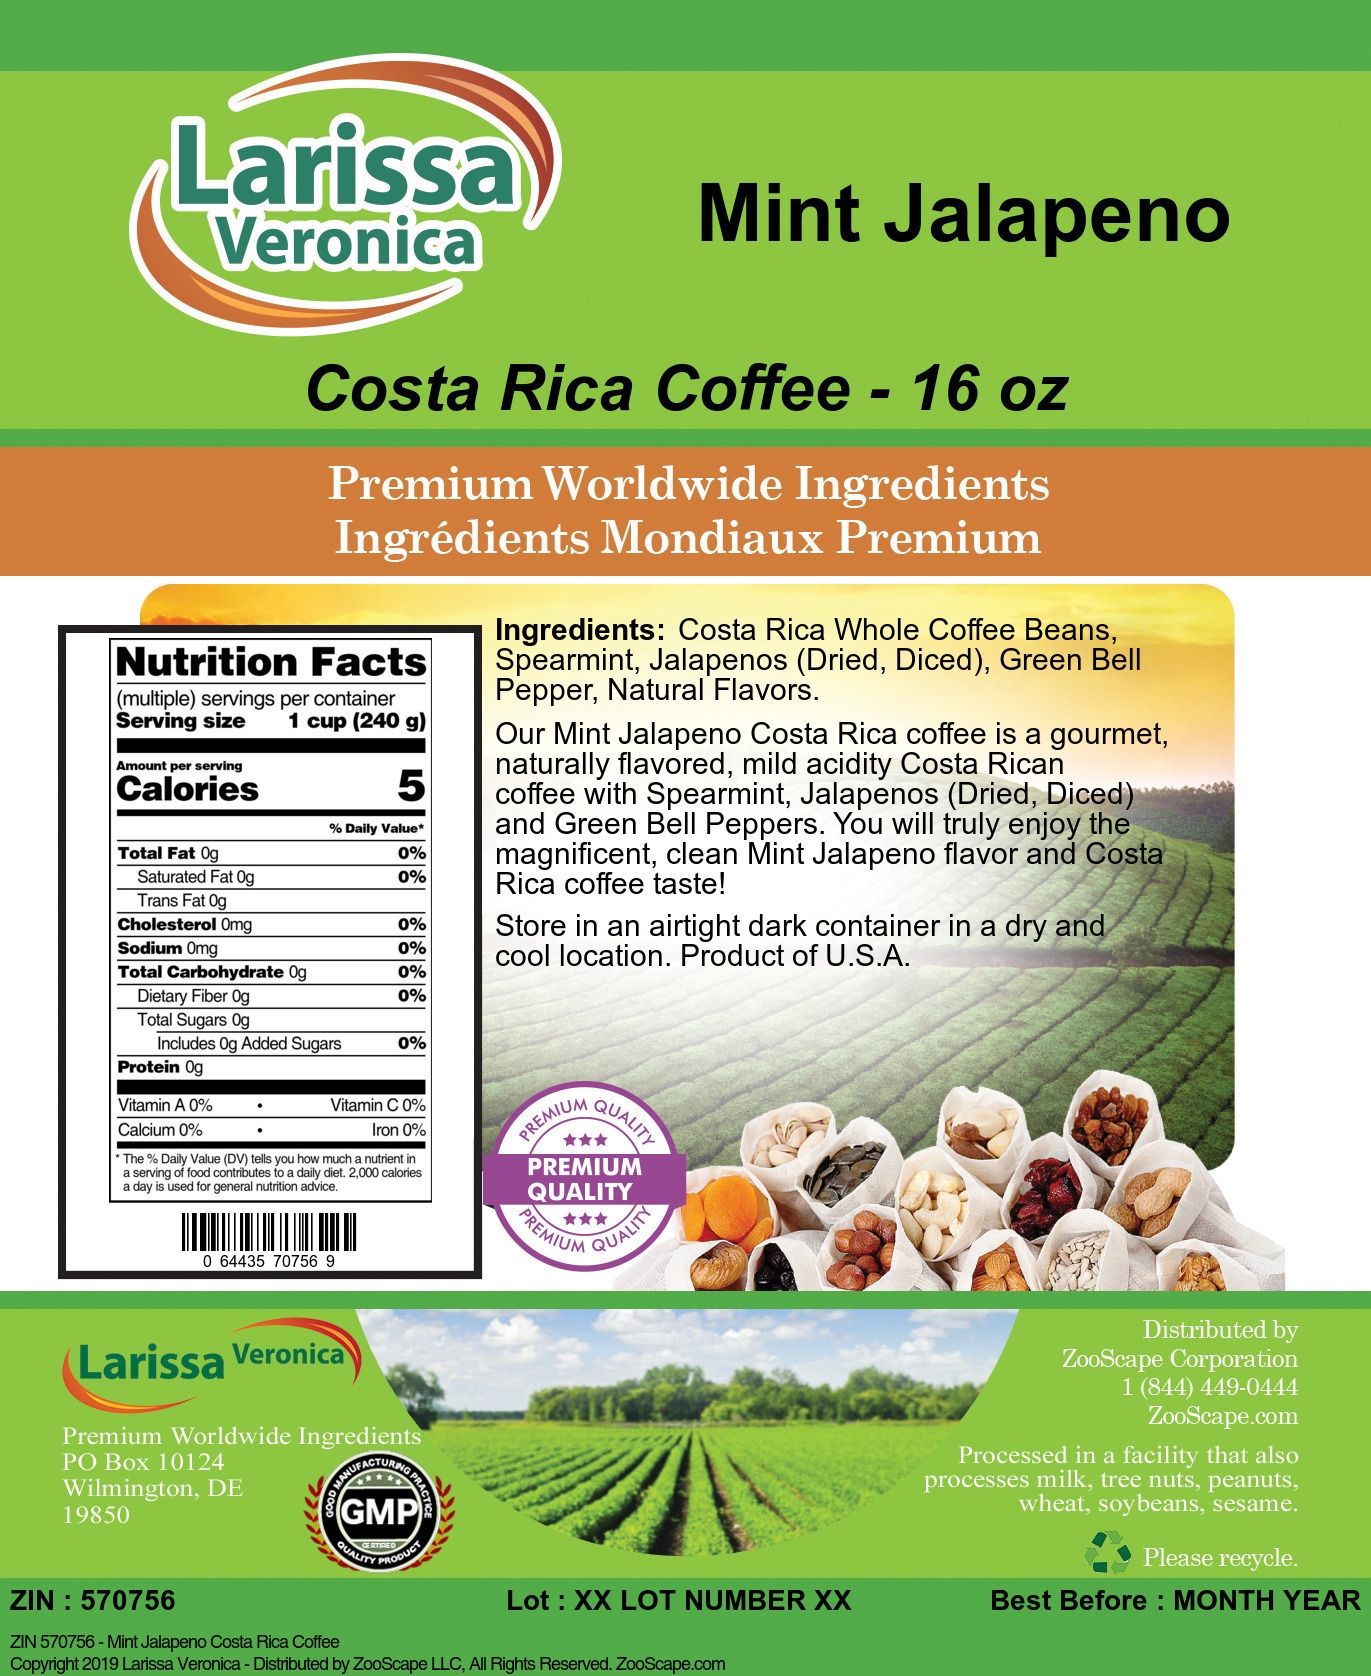 Mint Jalapeno Costa Rica Coffee - Label